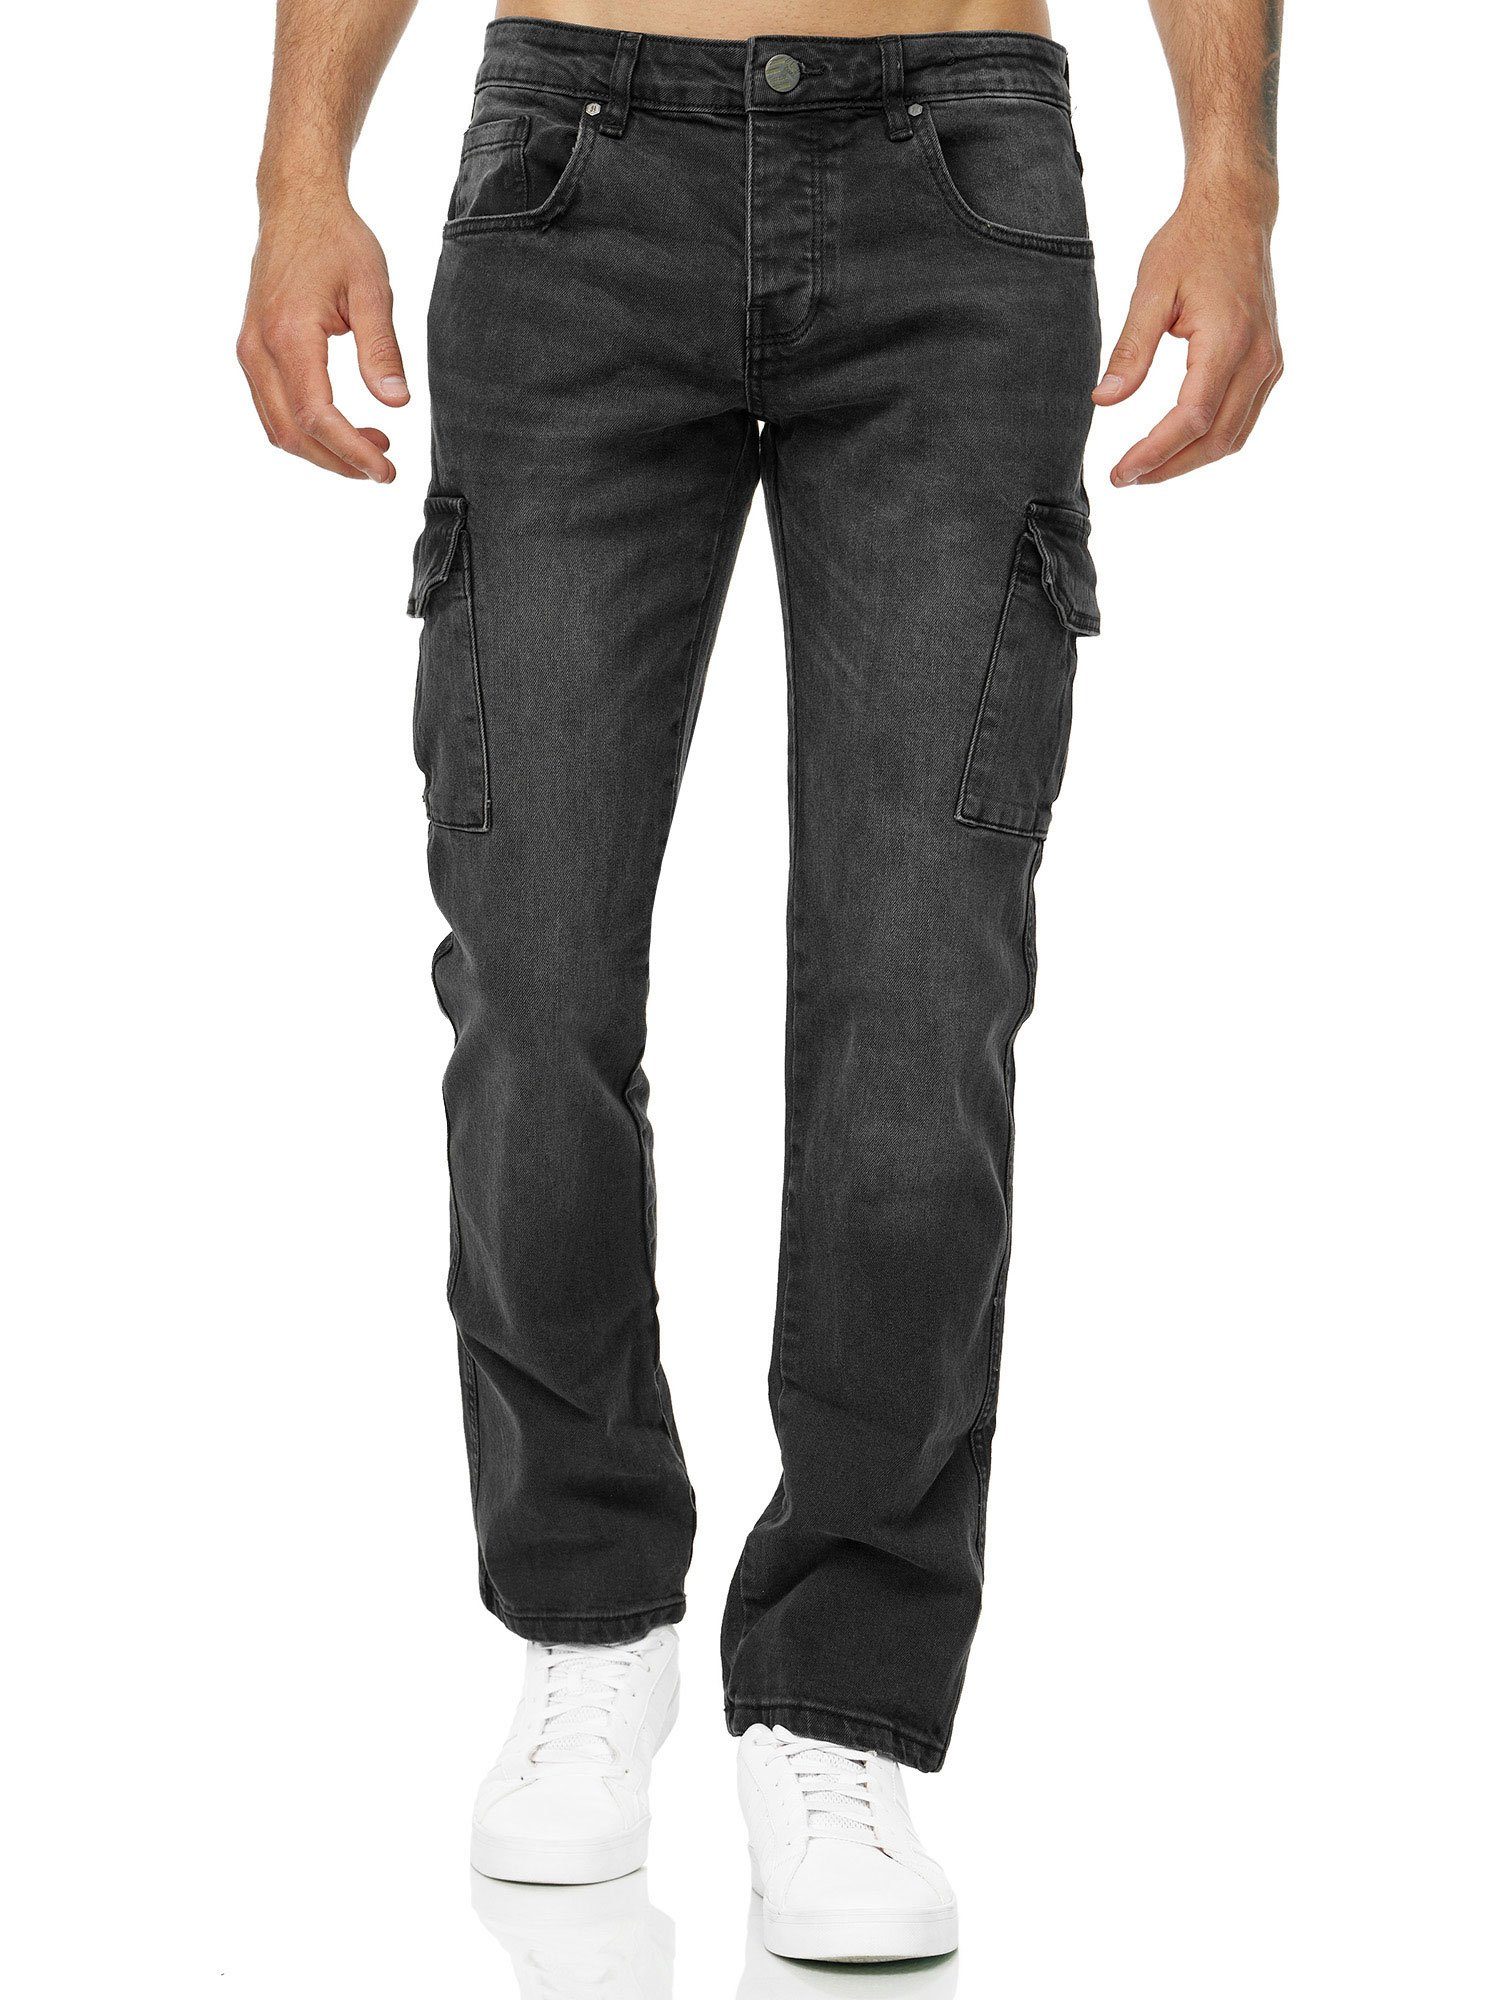 A104 Regular Straight-Jeans Denim Jeans Hose Tazzio schwarz Fit Cargo